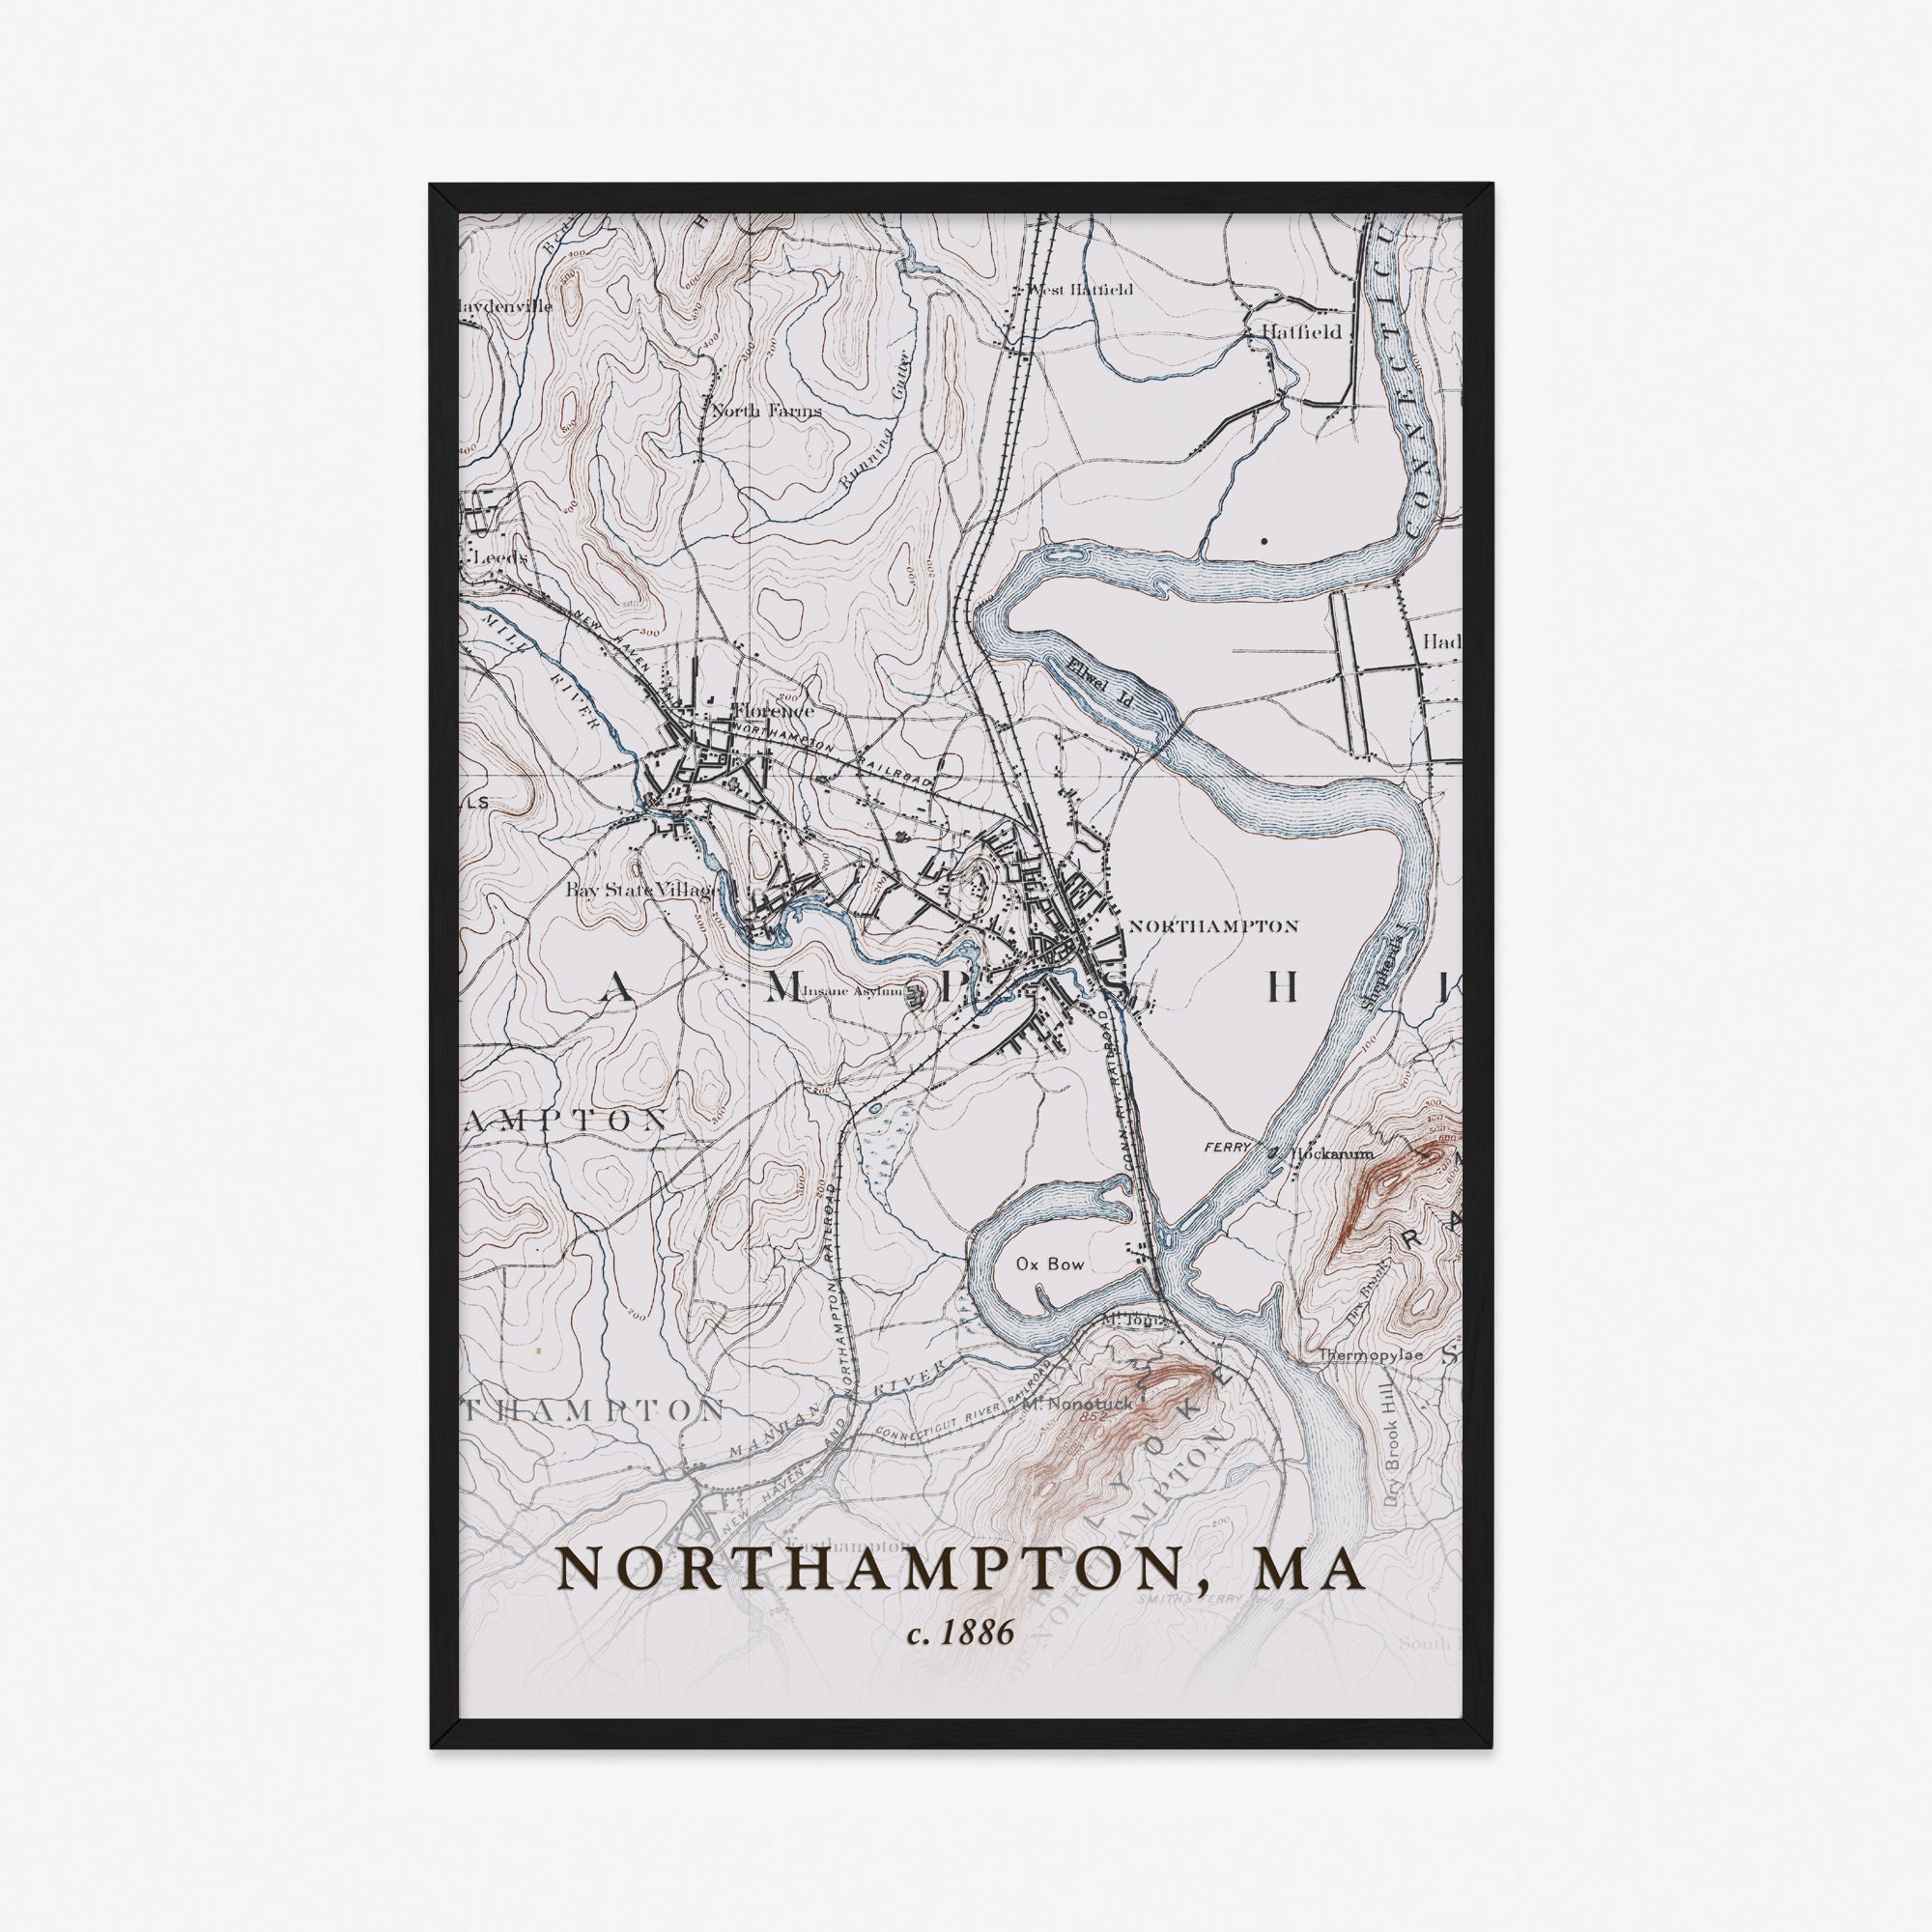 Northampton, MA - 1886 Topographic Map